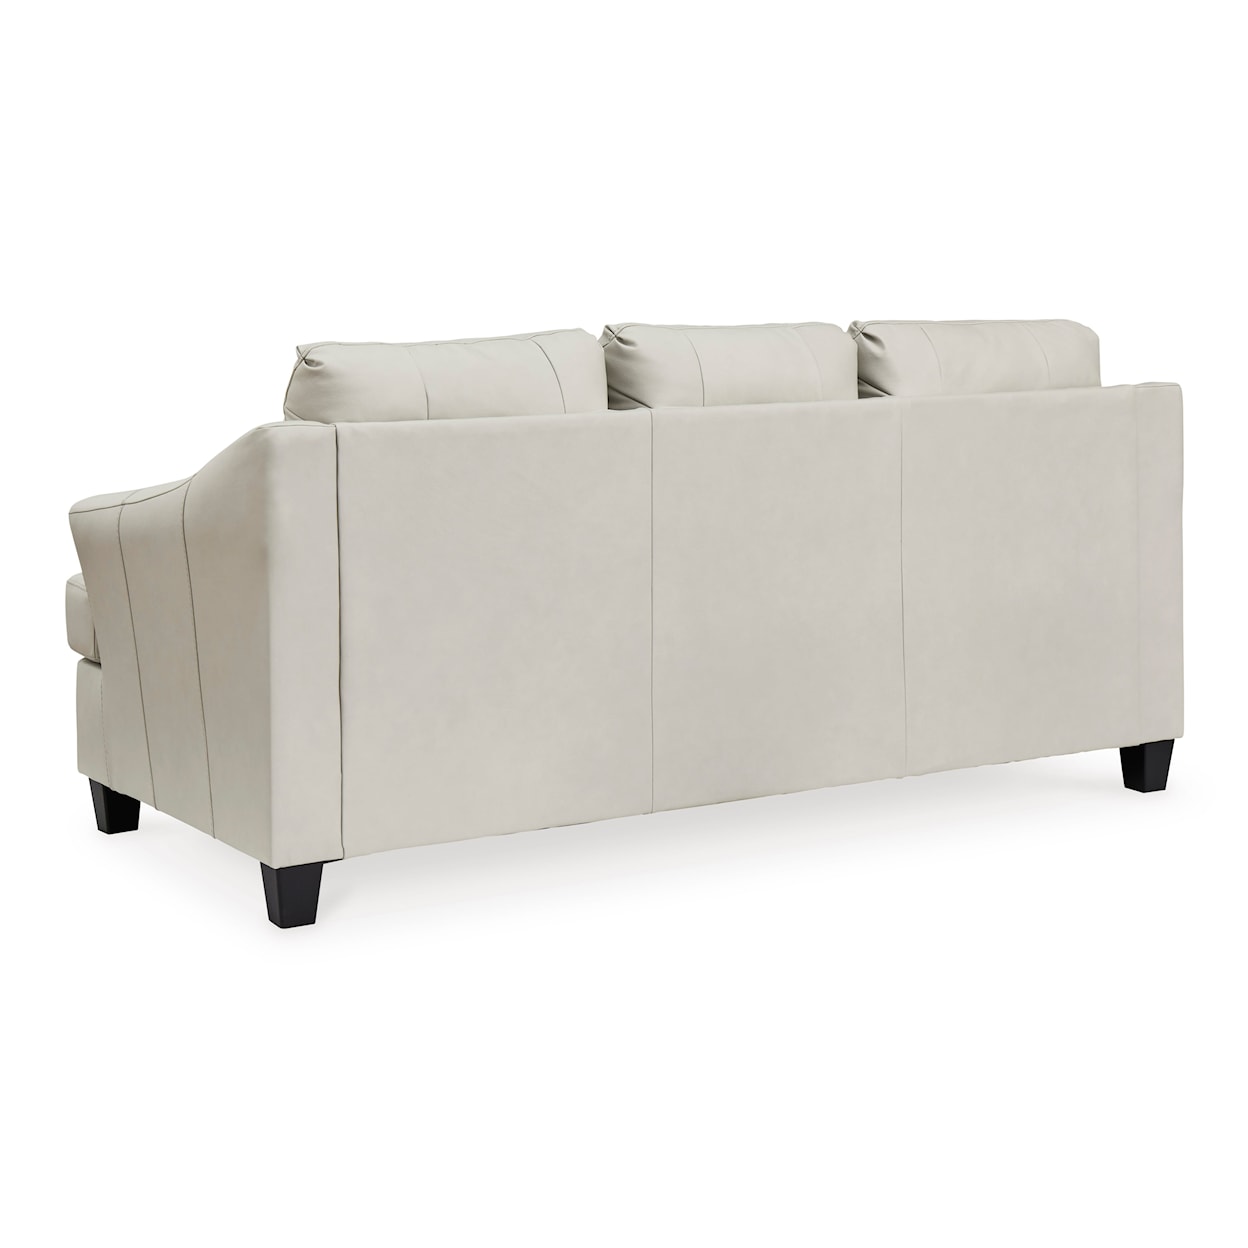 Ashley Furniture Signature Design Genoa Queen Sofa Sleeper